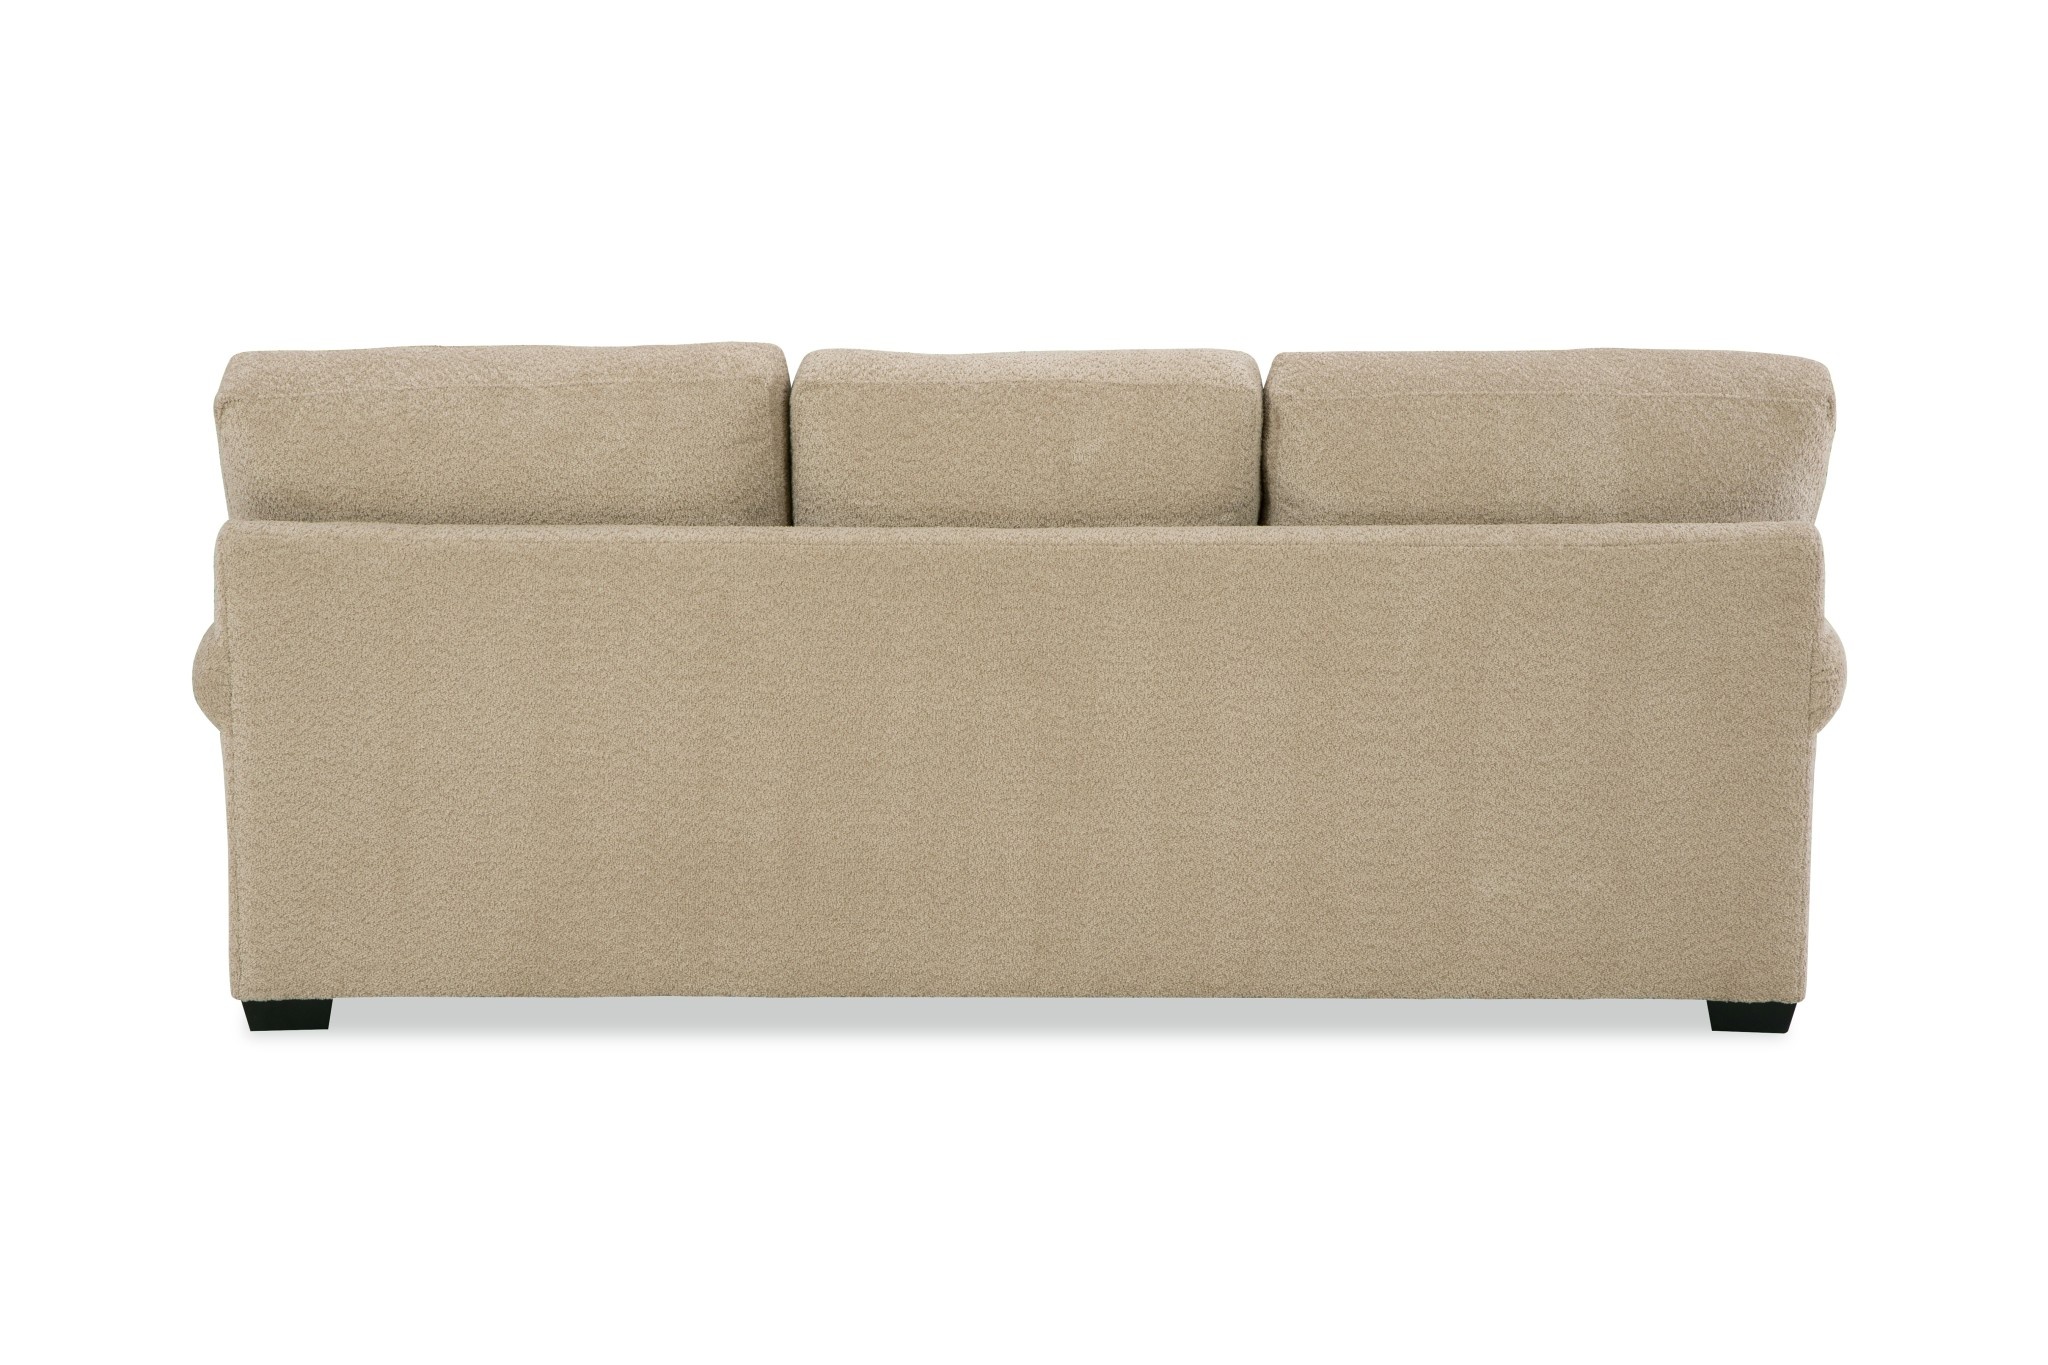 Craftmaster Furniture 72365 Sofa